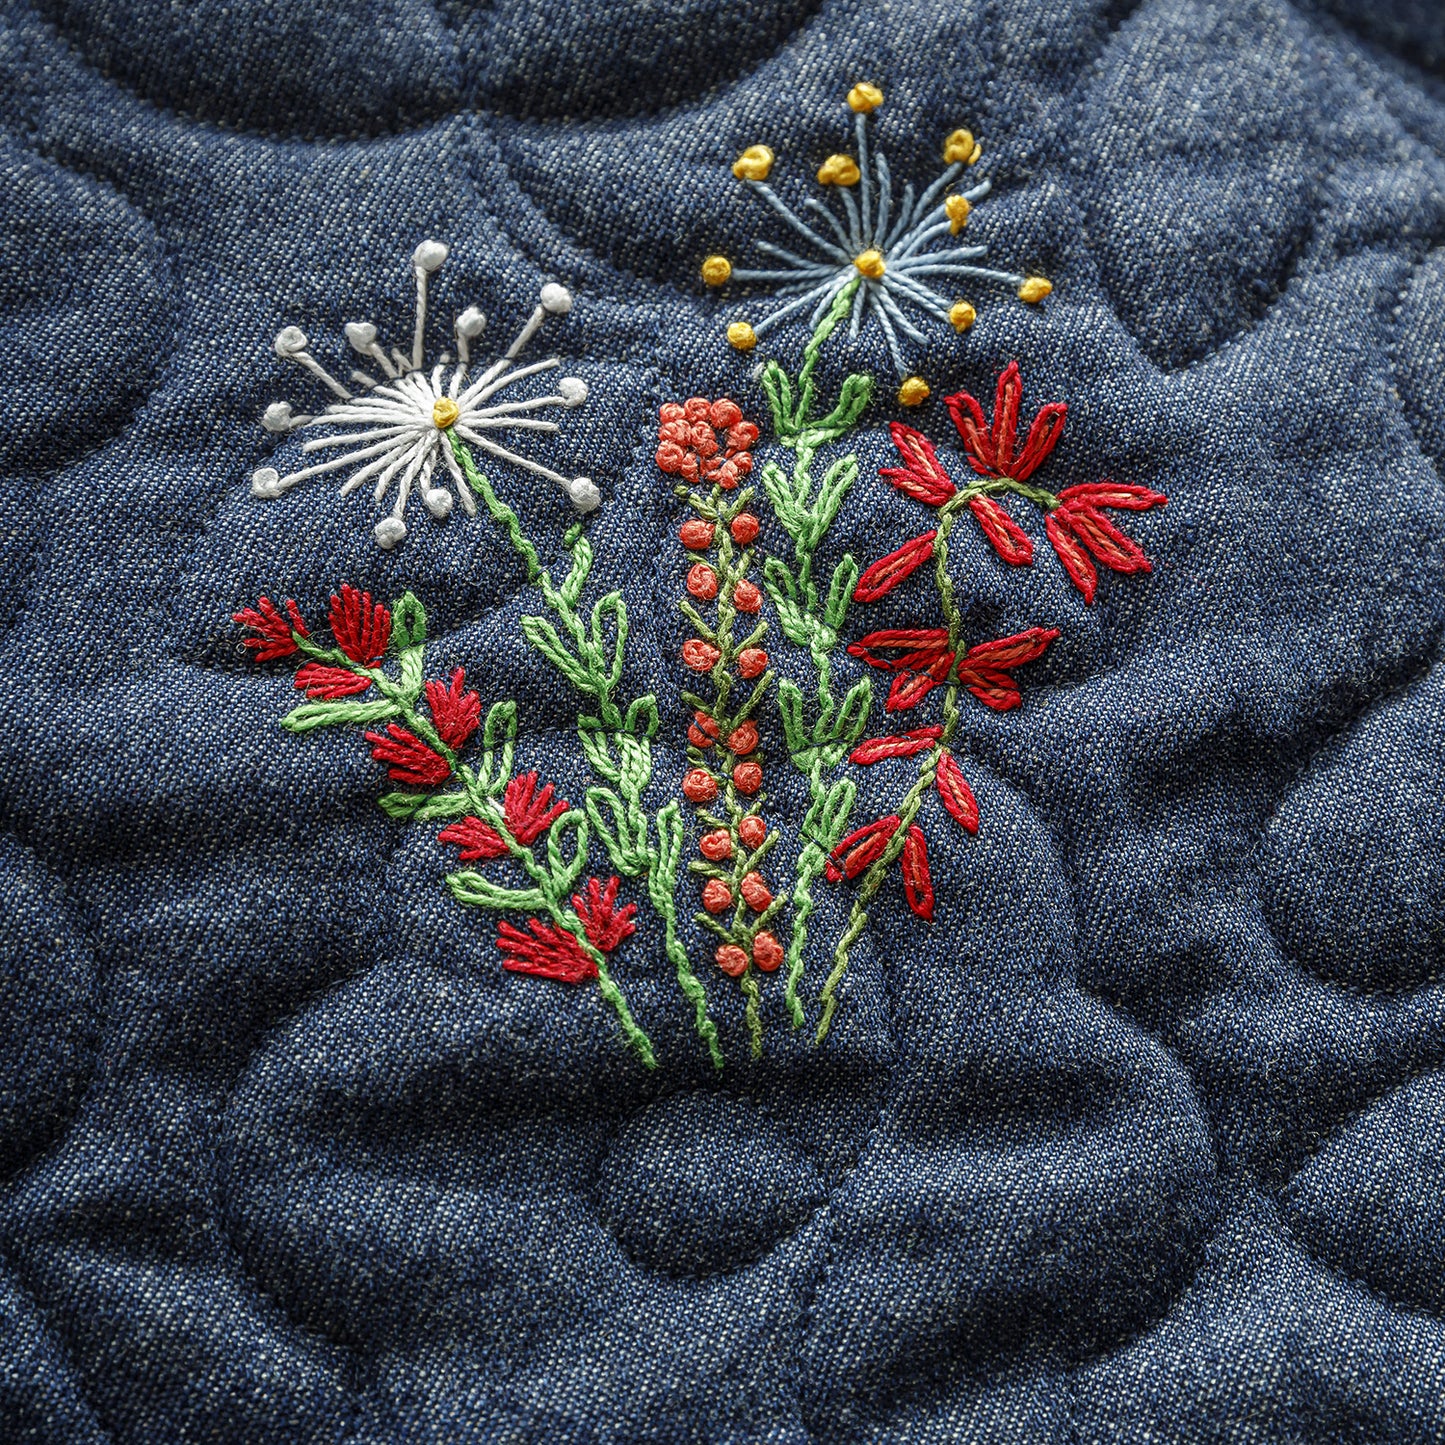 PREORDER - Ingrid's Wildflowers - An Heirloom Embroidery Kit by Missouri Star Alternative View #22